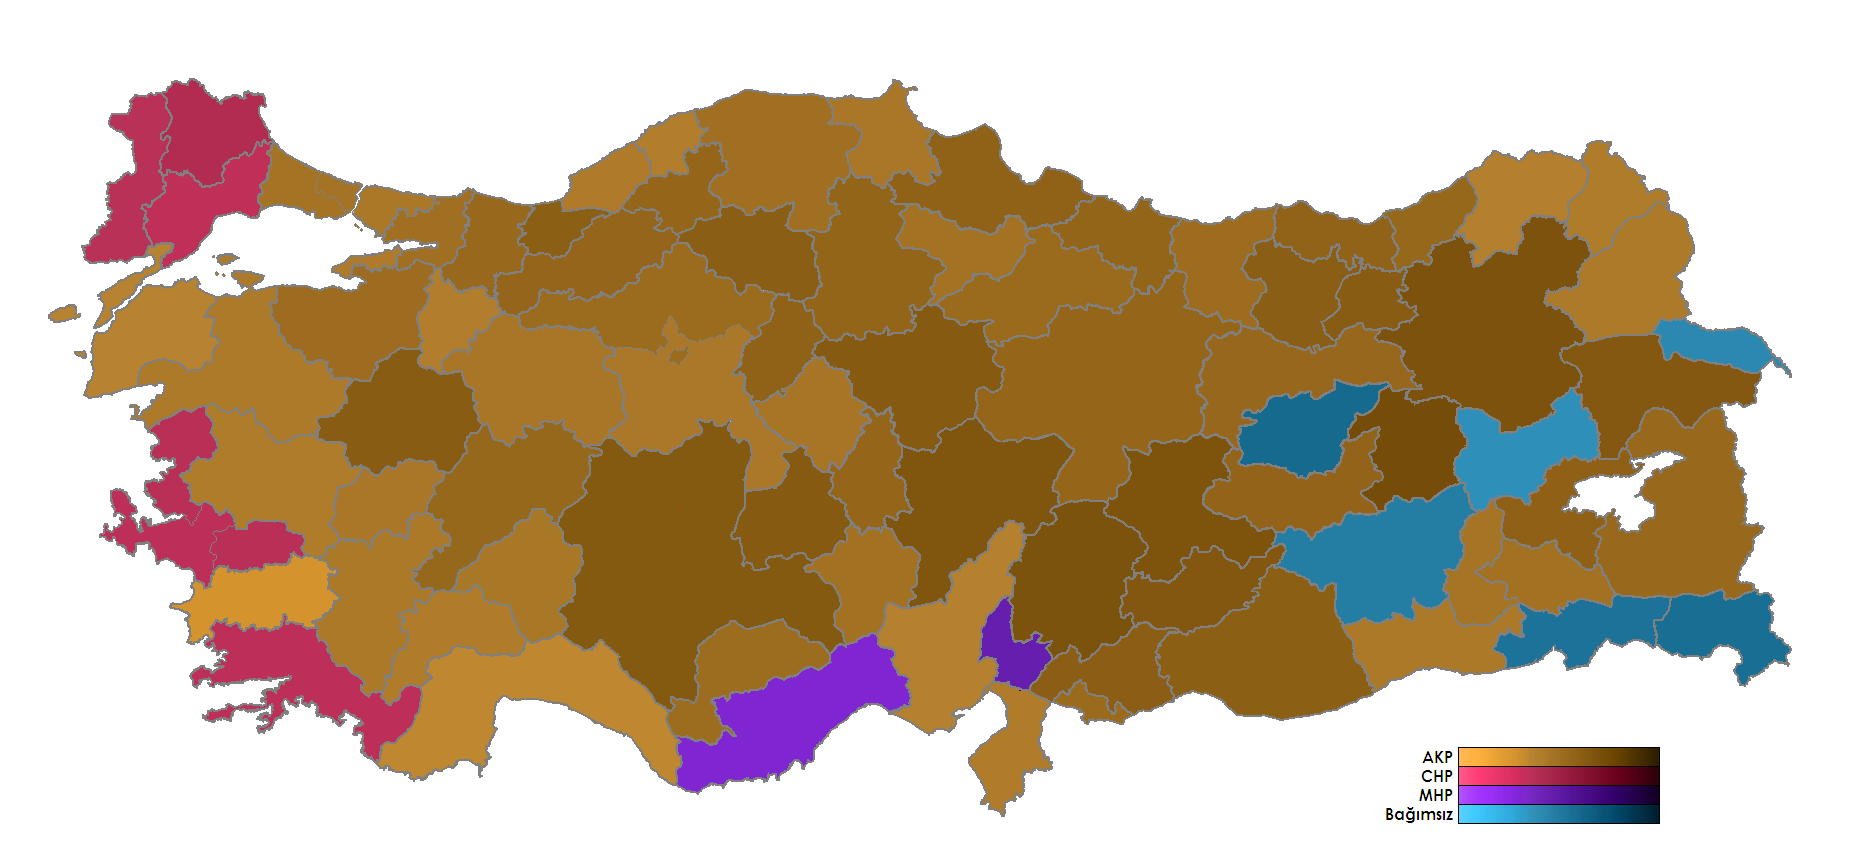 Turkey2007JulyElectionComposite.png